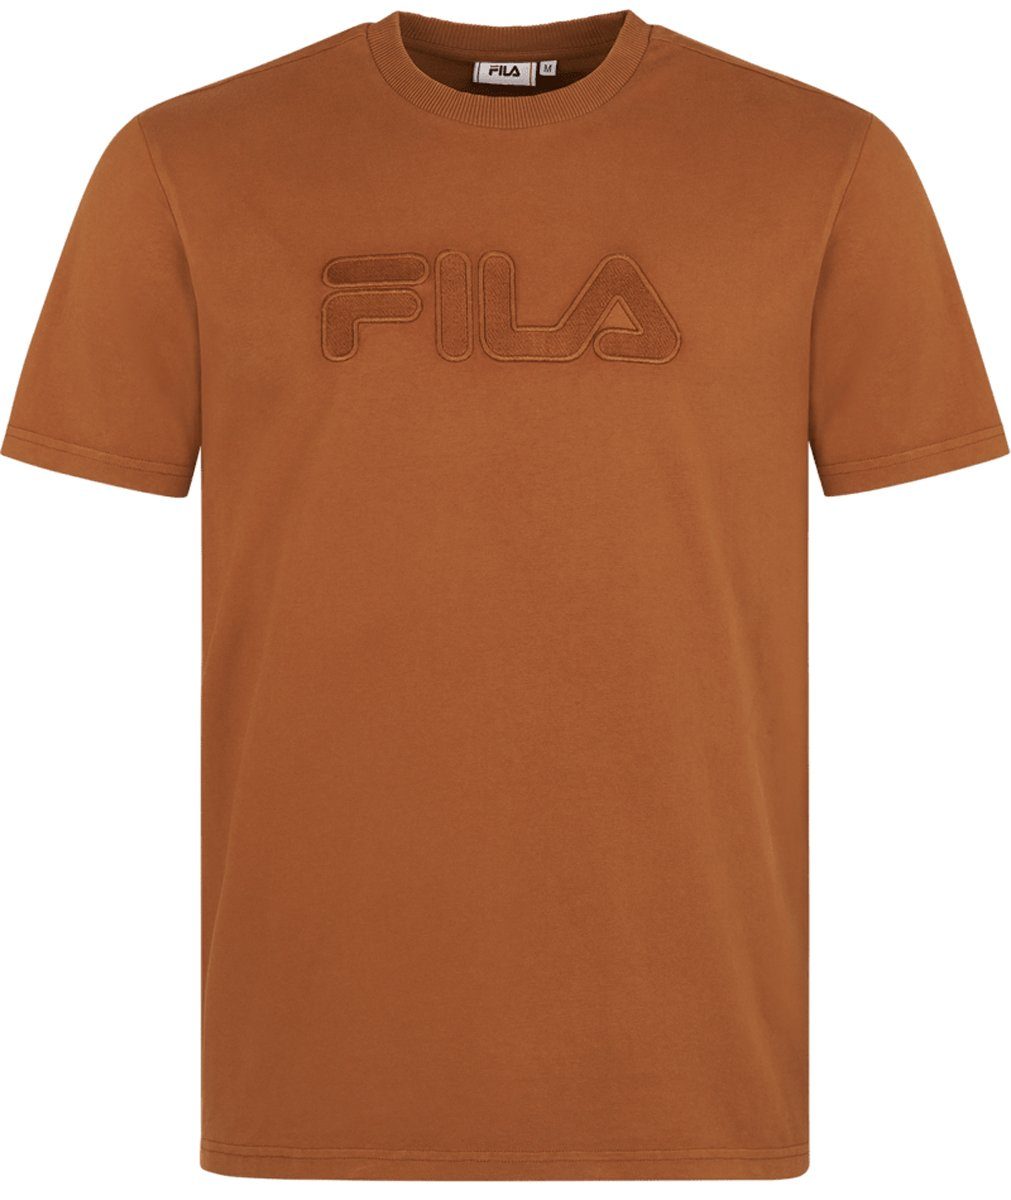 Fila T-Shirt Herren T-Shirt BUEK - Rundhals, Kurzarm Braun